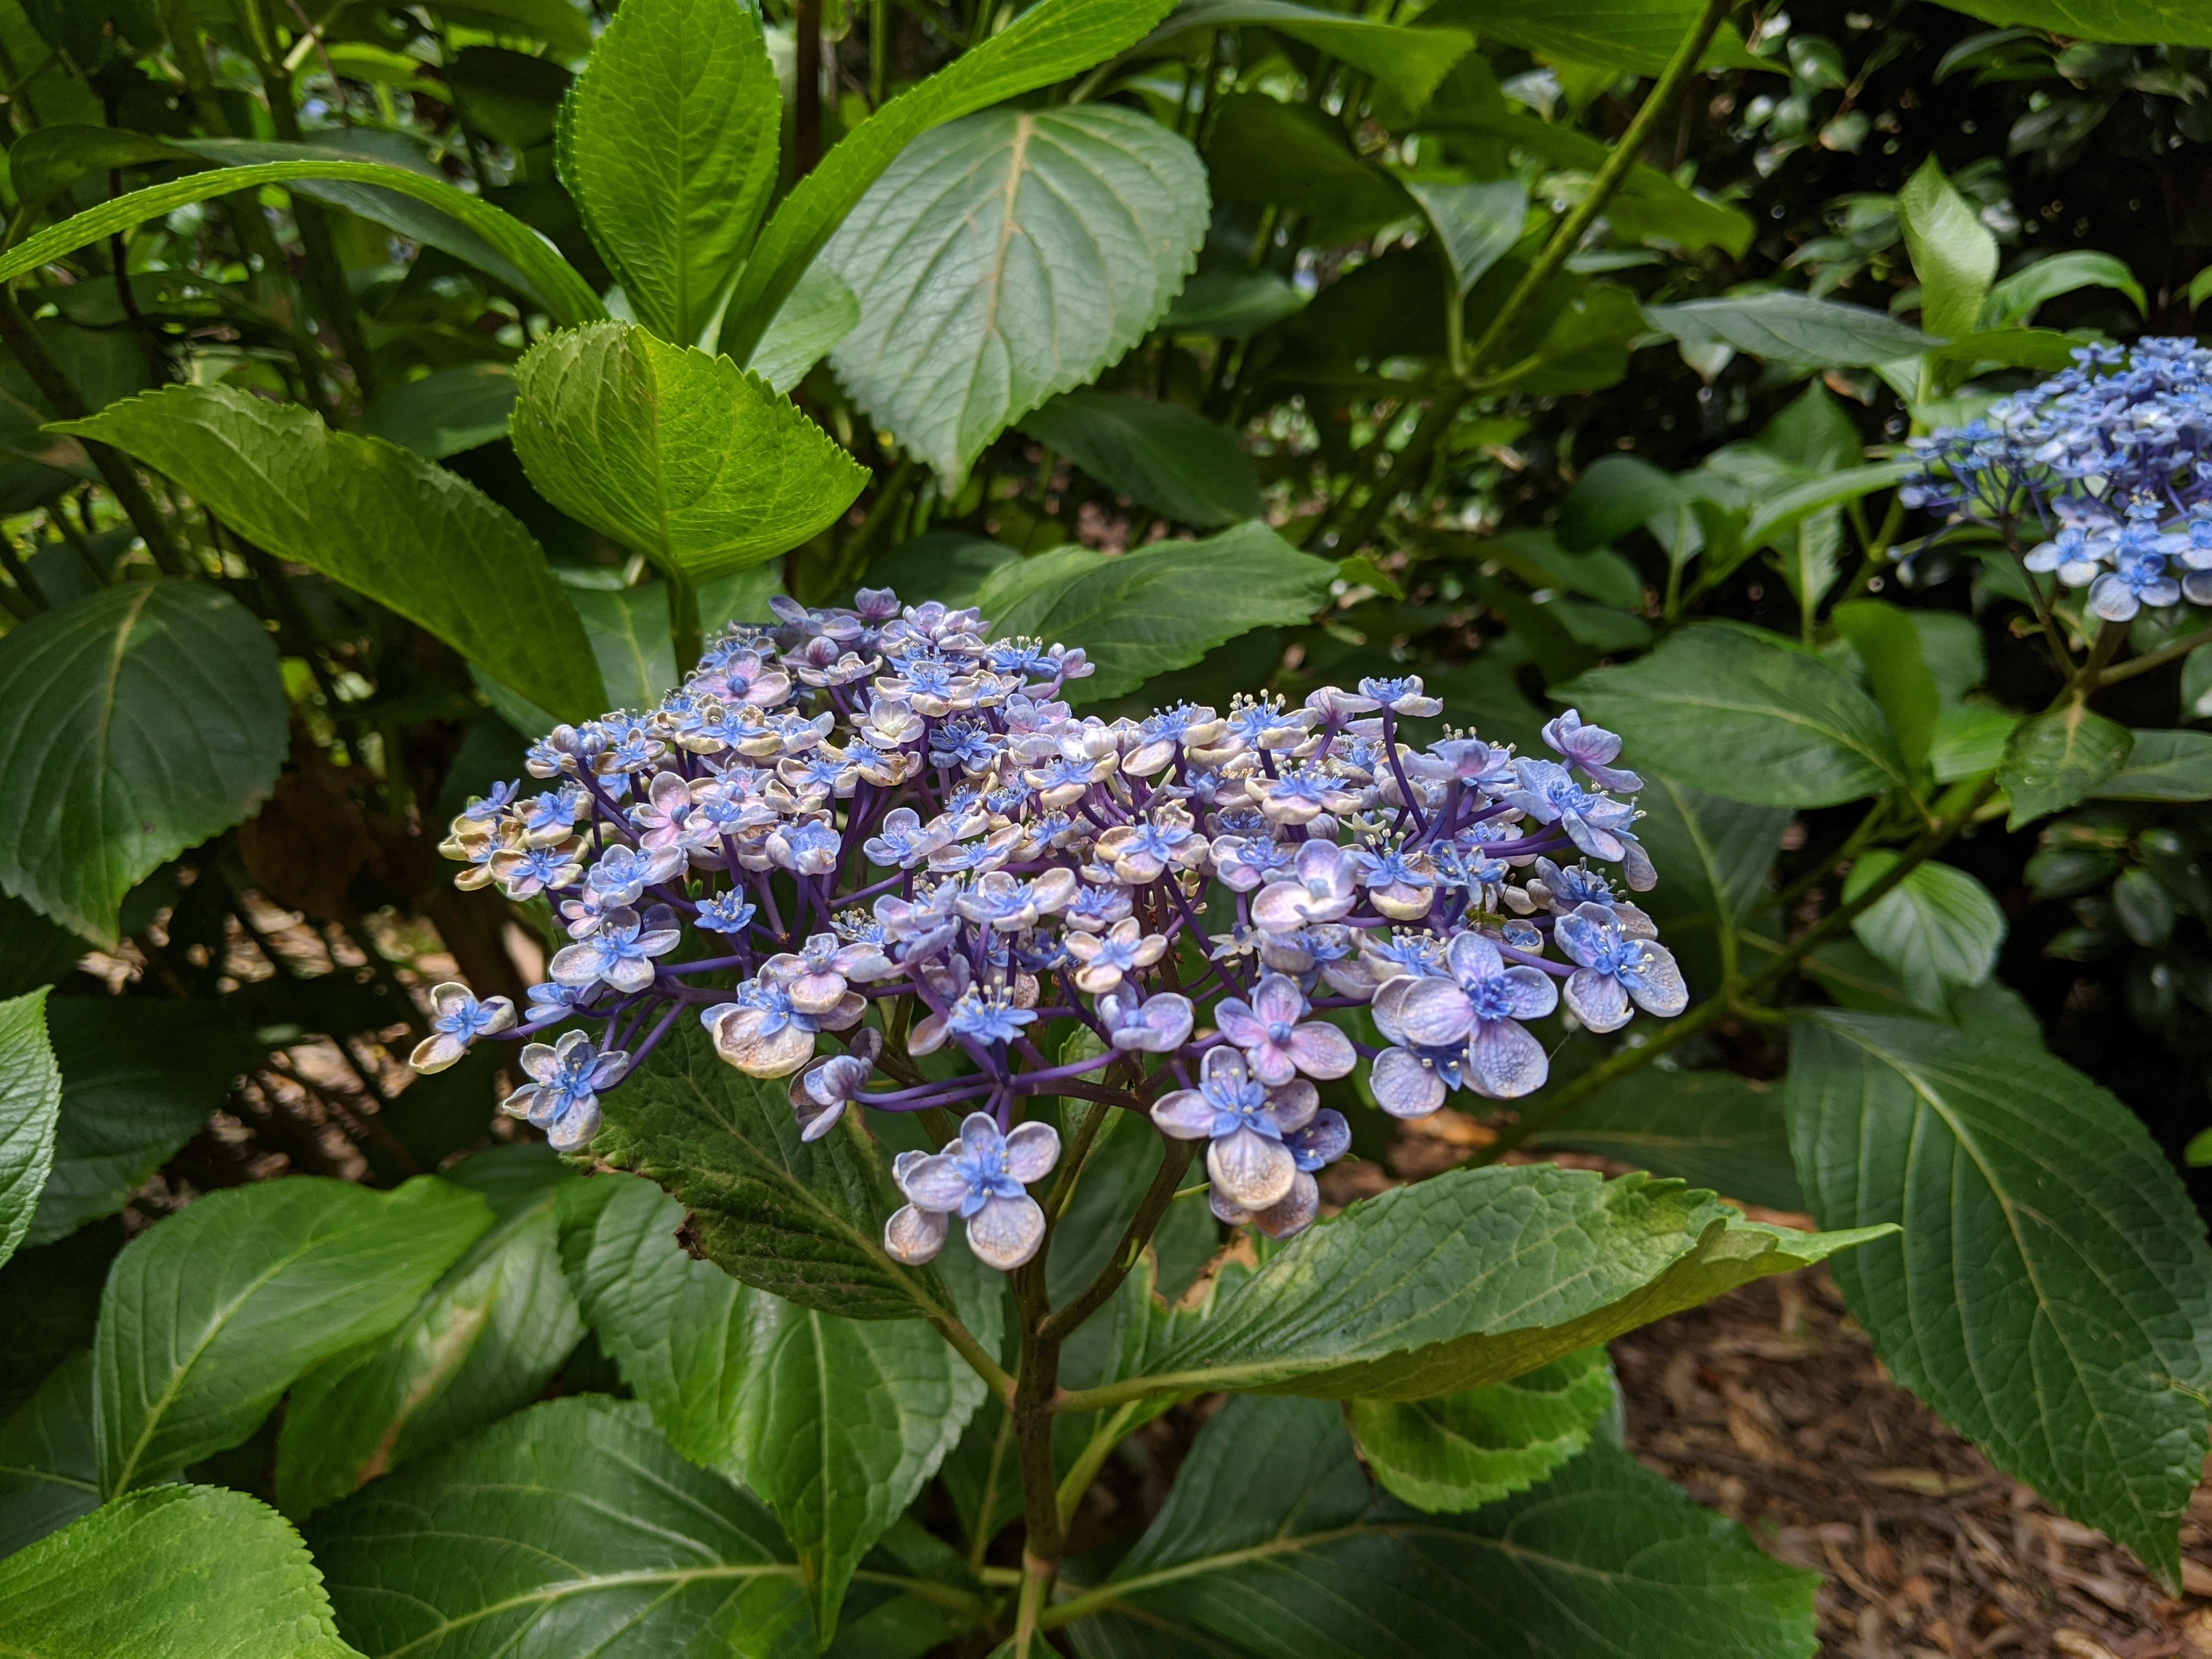 Caption: Beautiful blue flowers